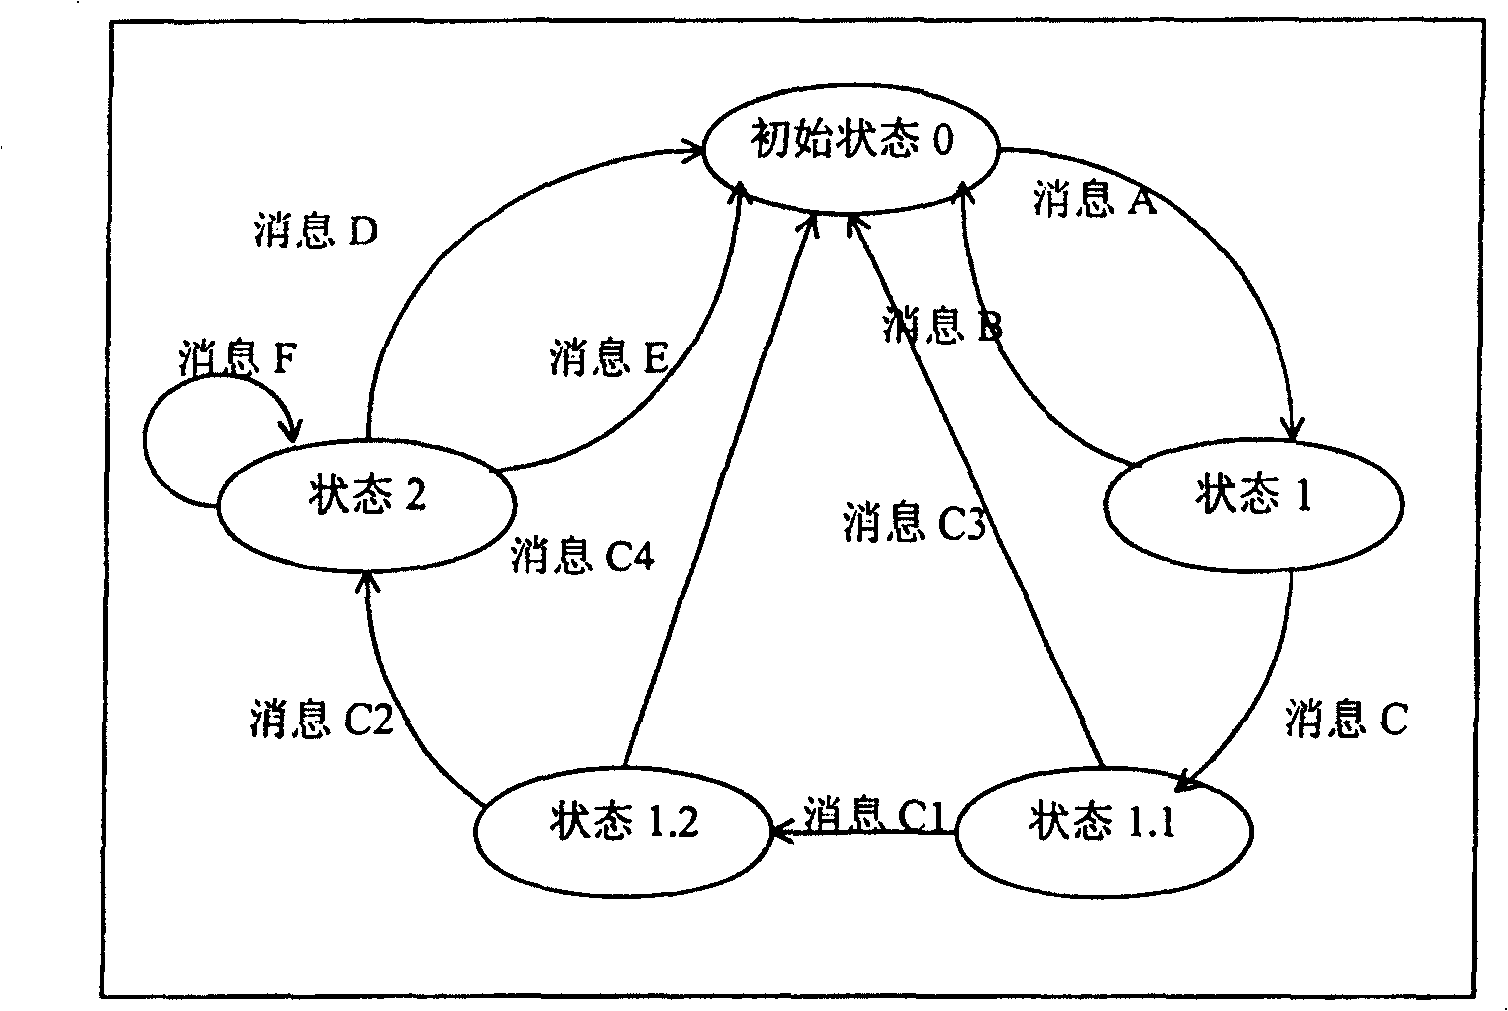 Intelligeat network control method of network exchange equipment